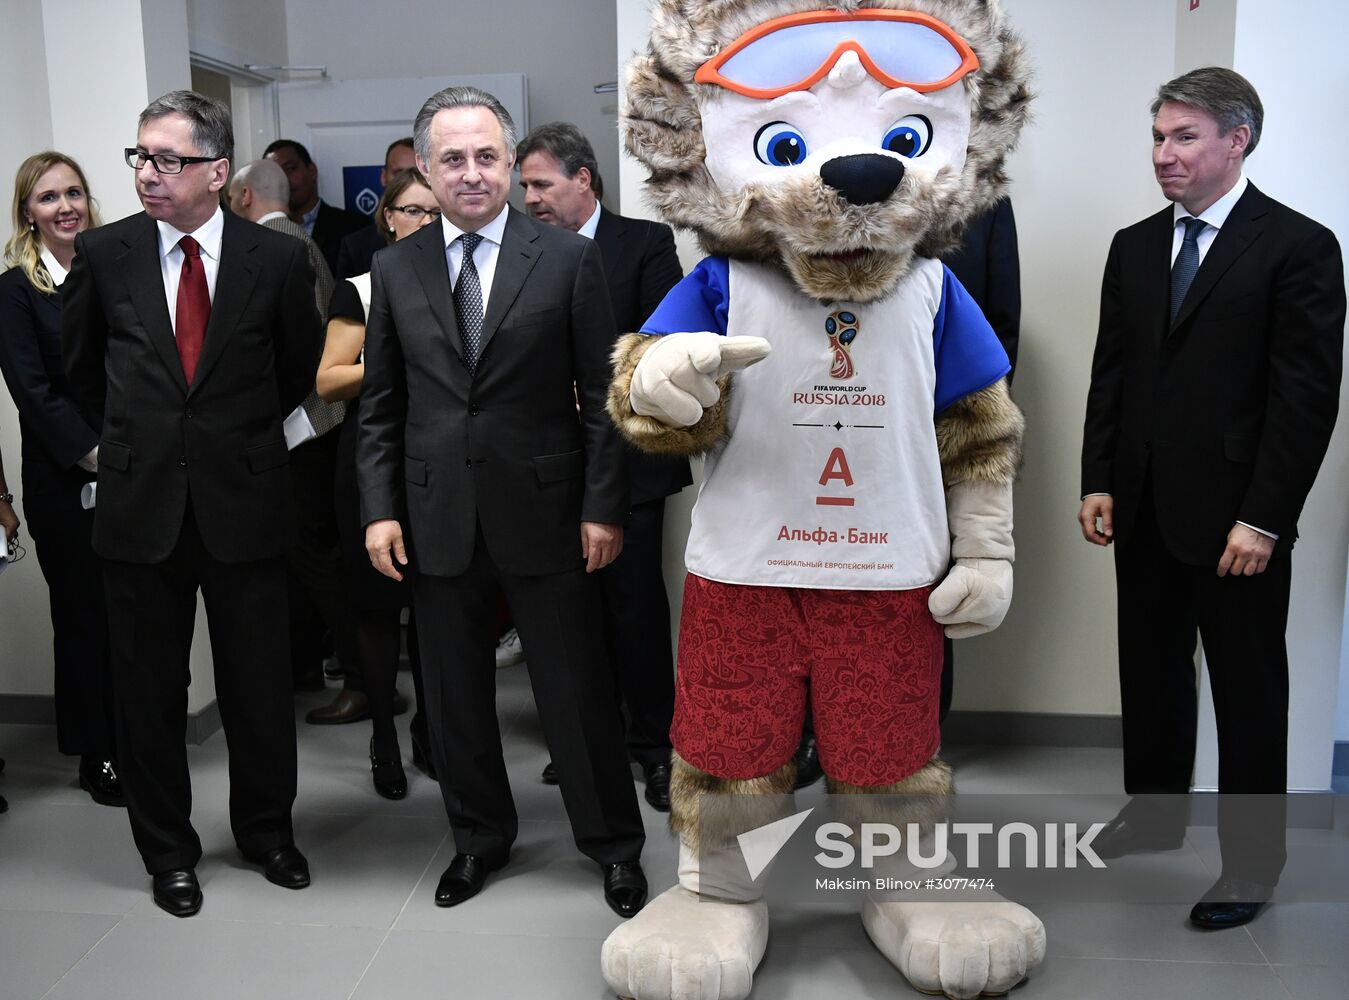 Opening of FIFA main ticket office